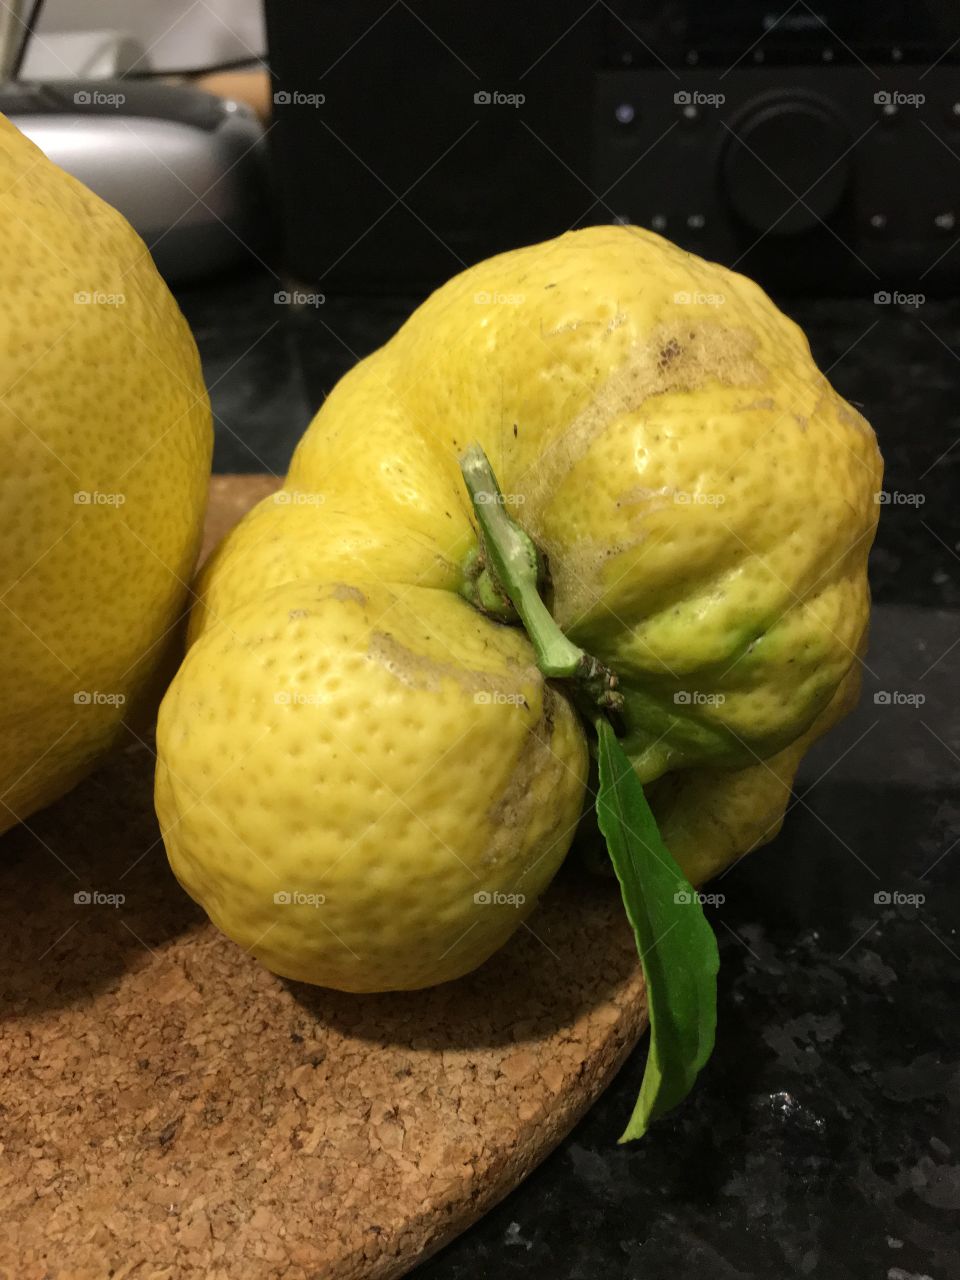 A lemon from my garden in Estoril, Portugal